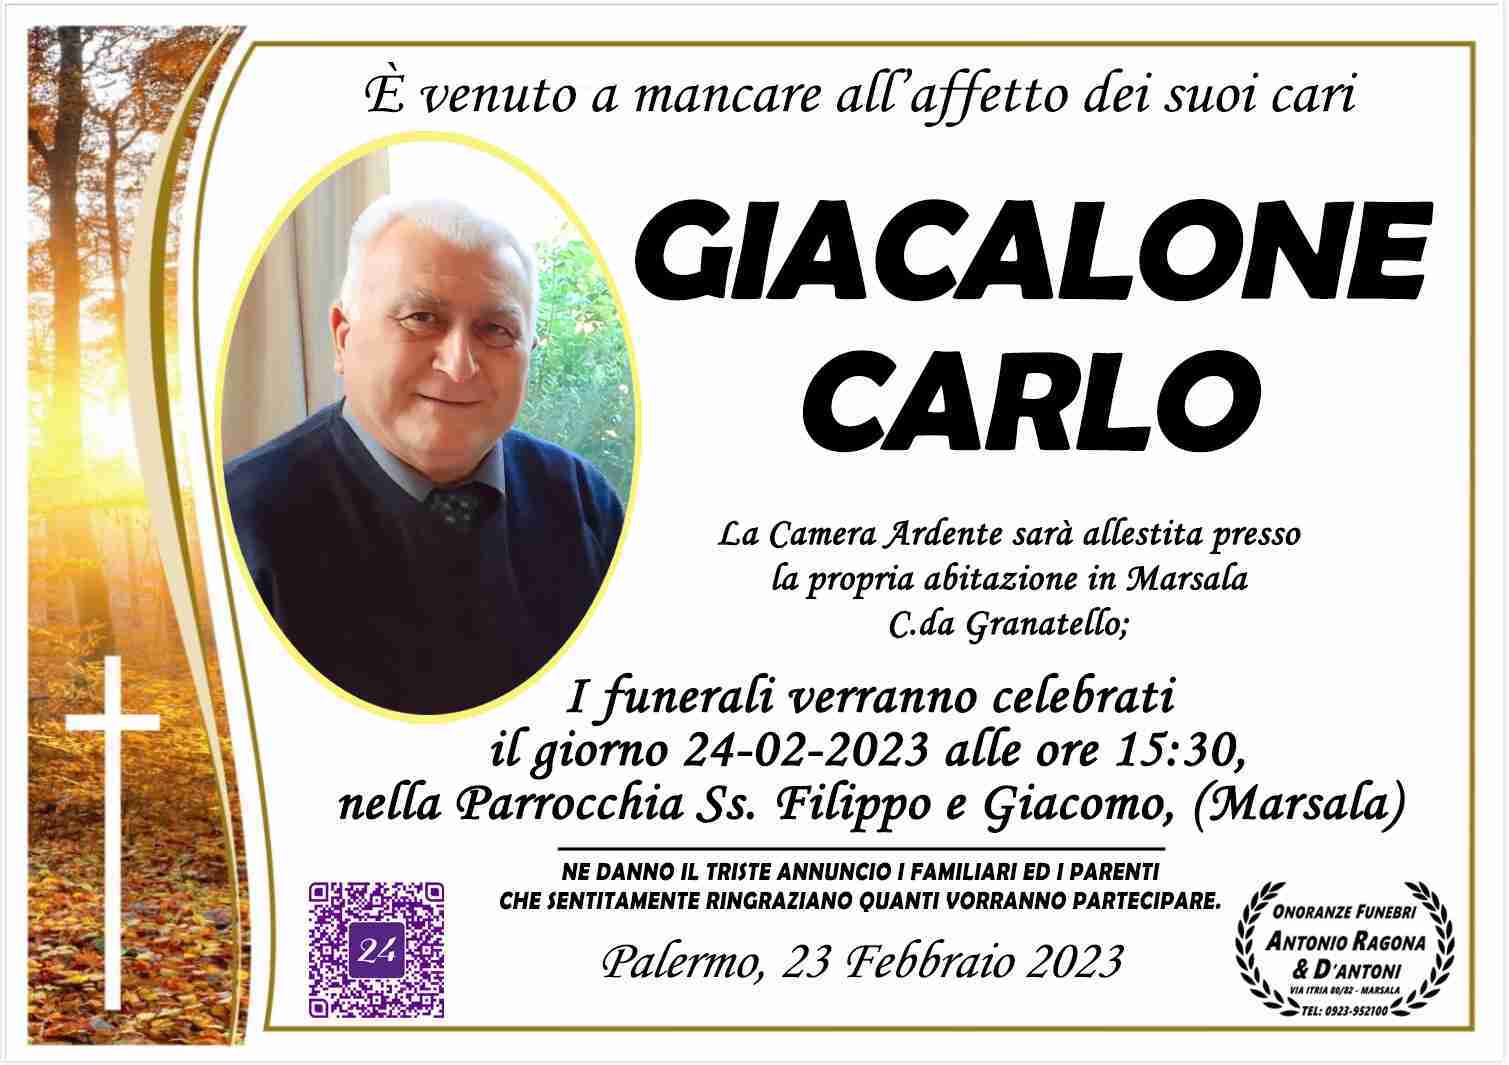 Carlo Giacalone